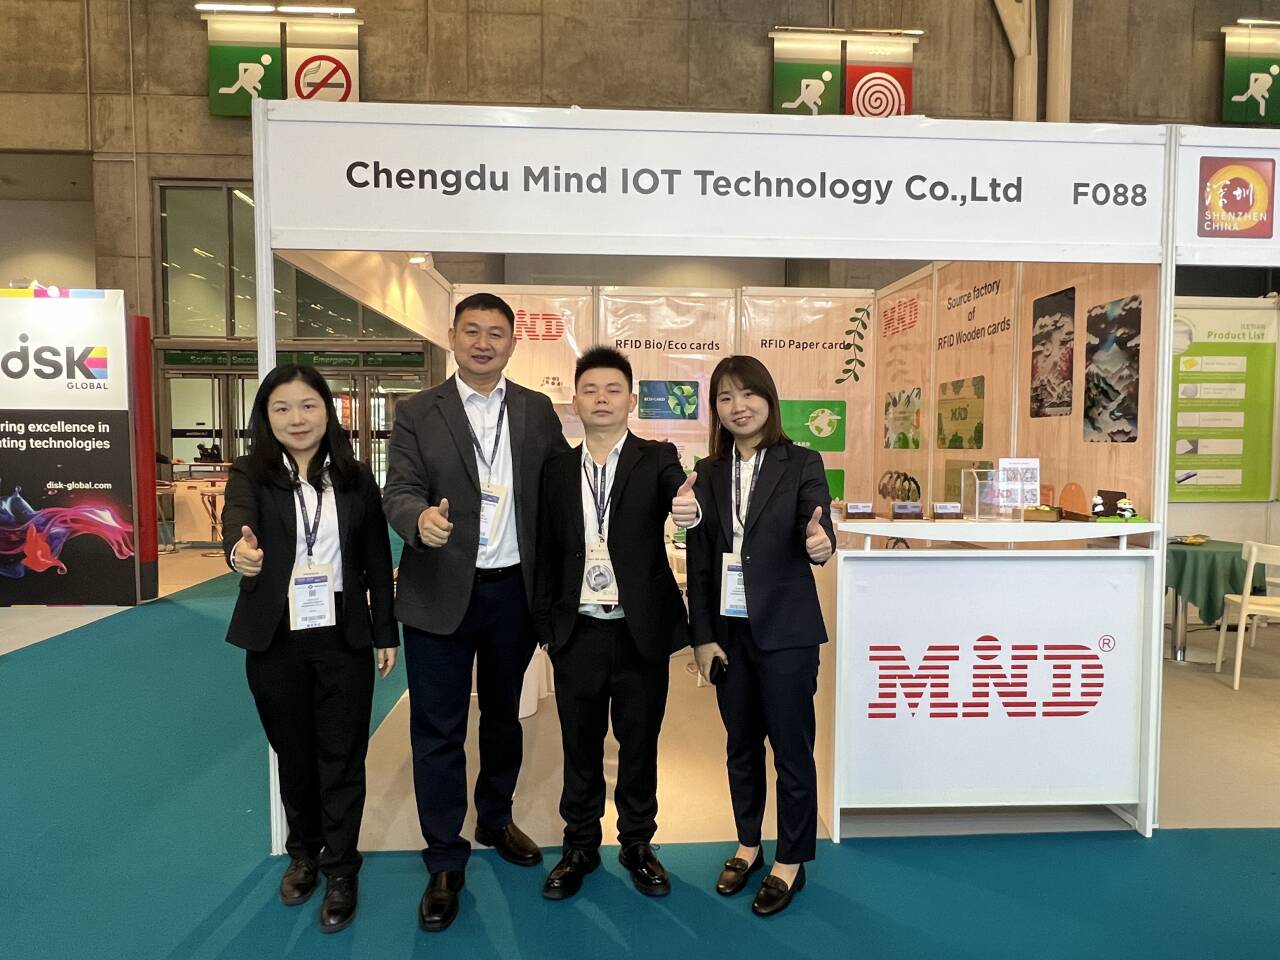 Chengdu Mind-ը մասնակցել է Փարիզի Smart Card, Payment and Intelligent Identification, թվային անվտանգության ցուցահանդեսին, որը բացվել է այսօր: